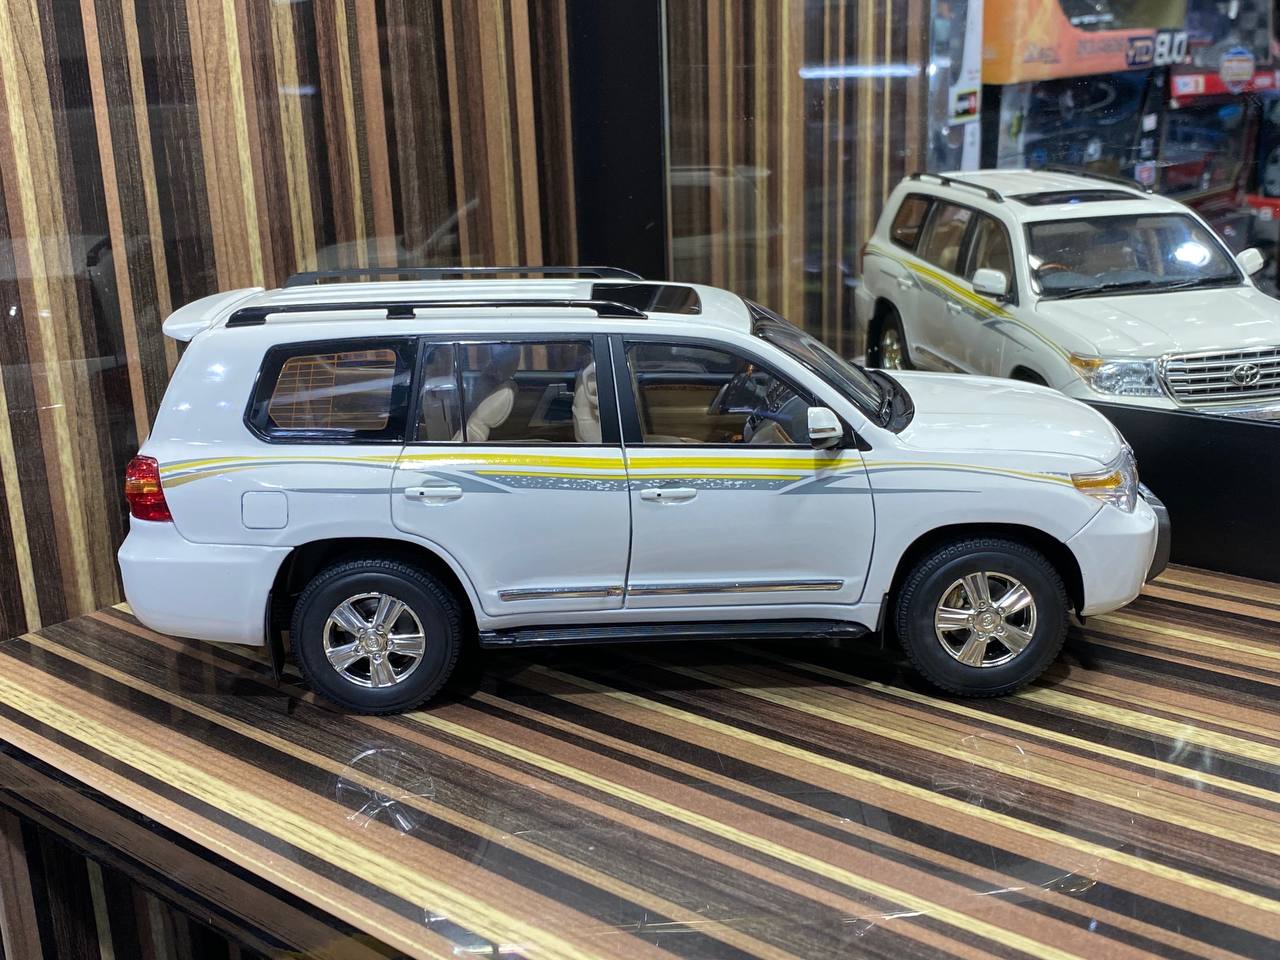 1/18 Diecast FAW TOYS Toyota Land Cruiser 200 - White Model Car